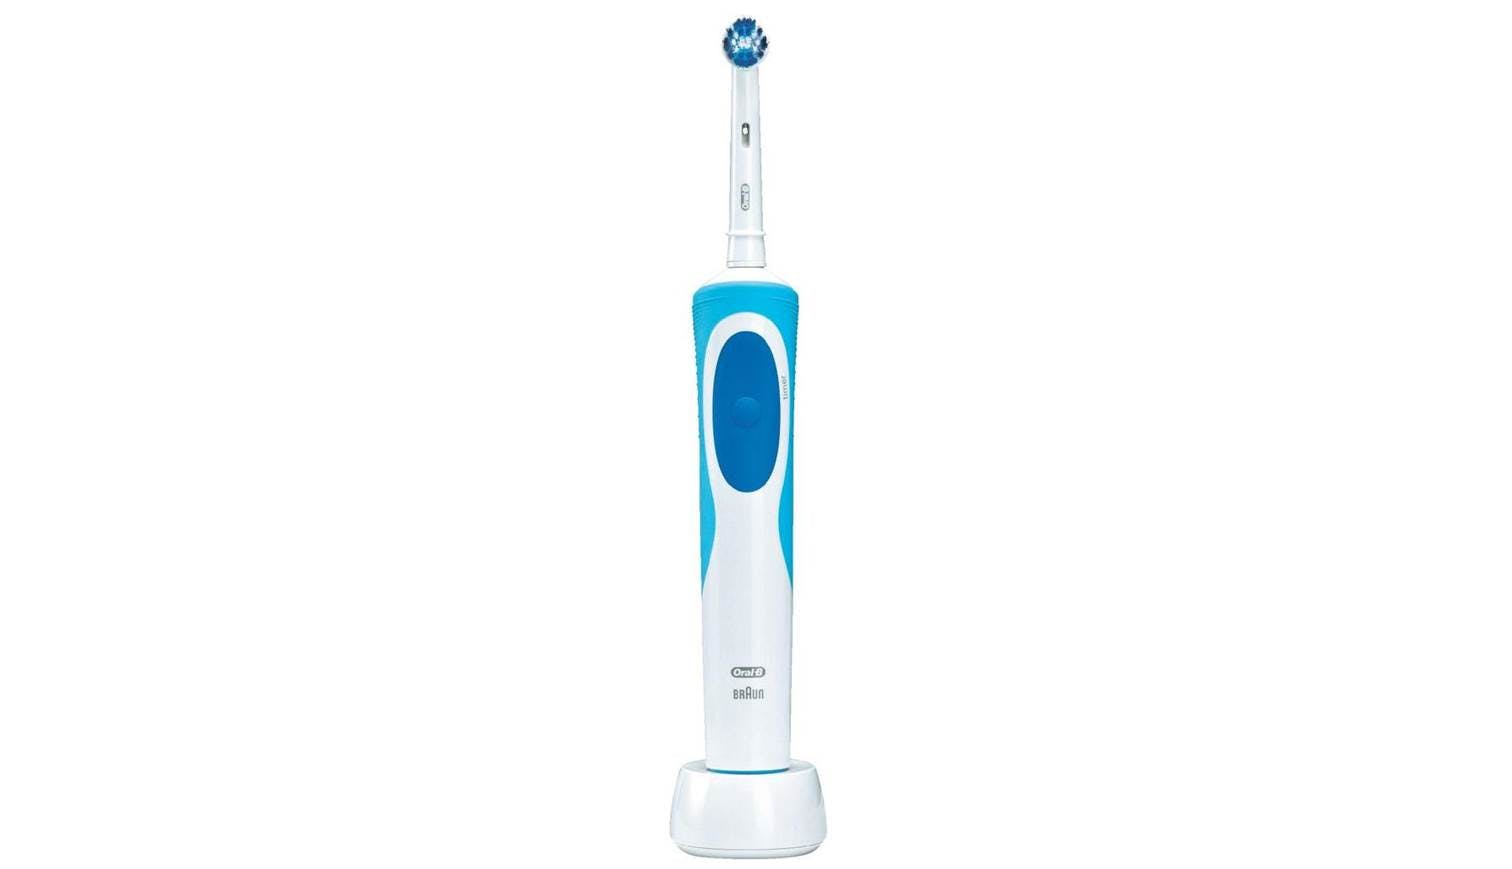 oral-b-electric-toothbrush-braun-deals-online-save-62-jlcatj-gob-mx